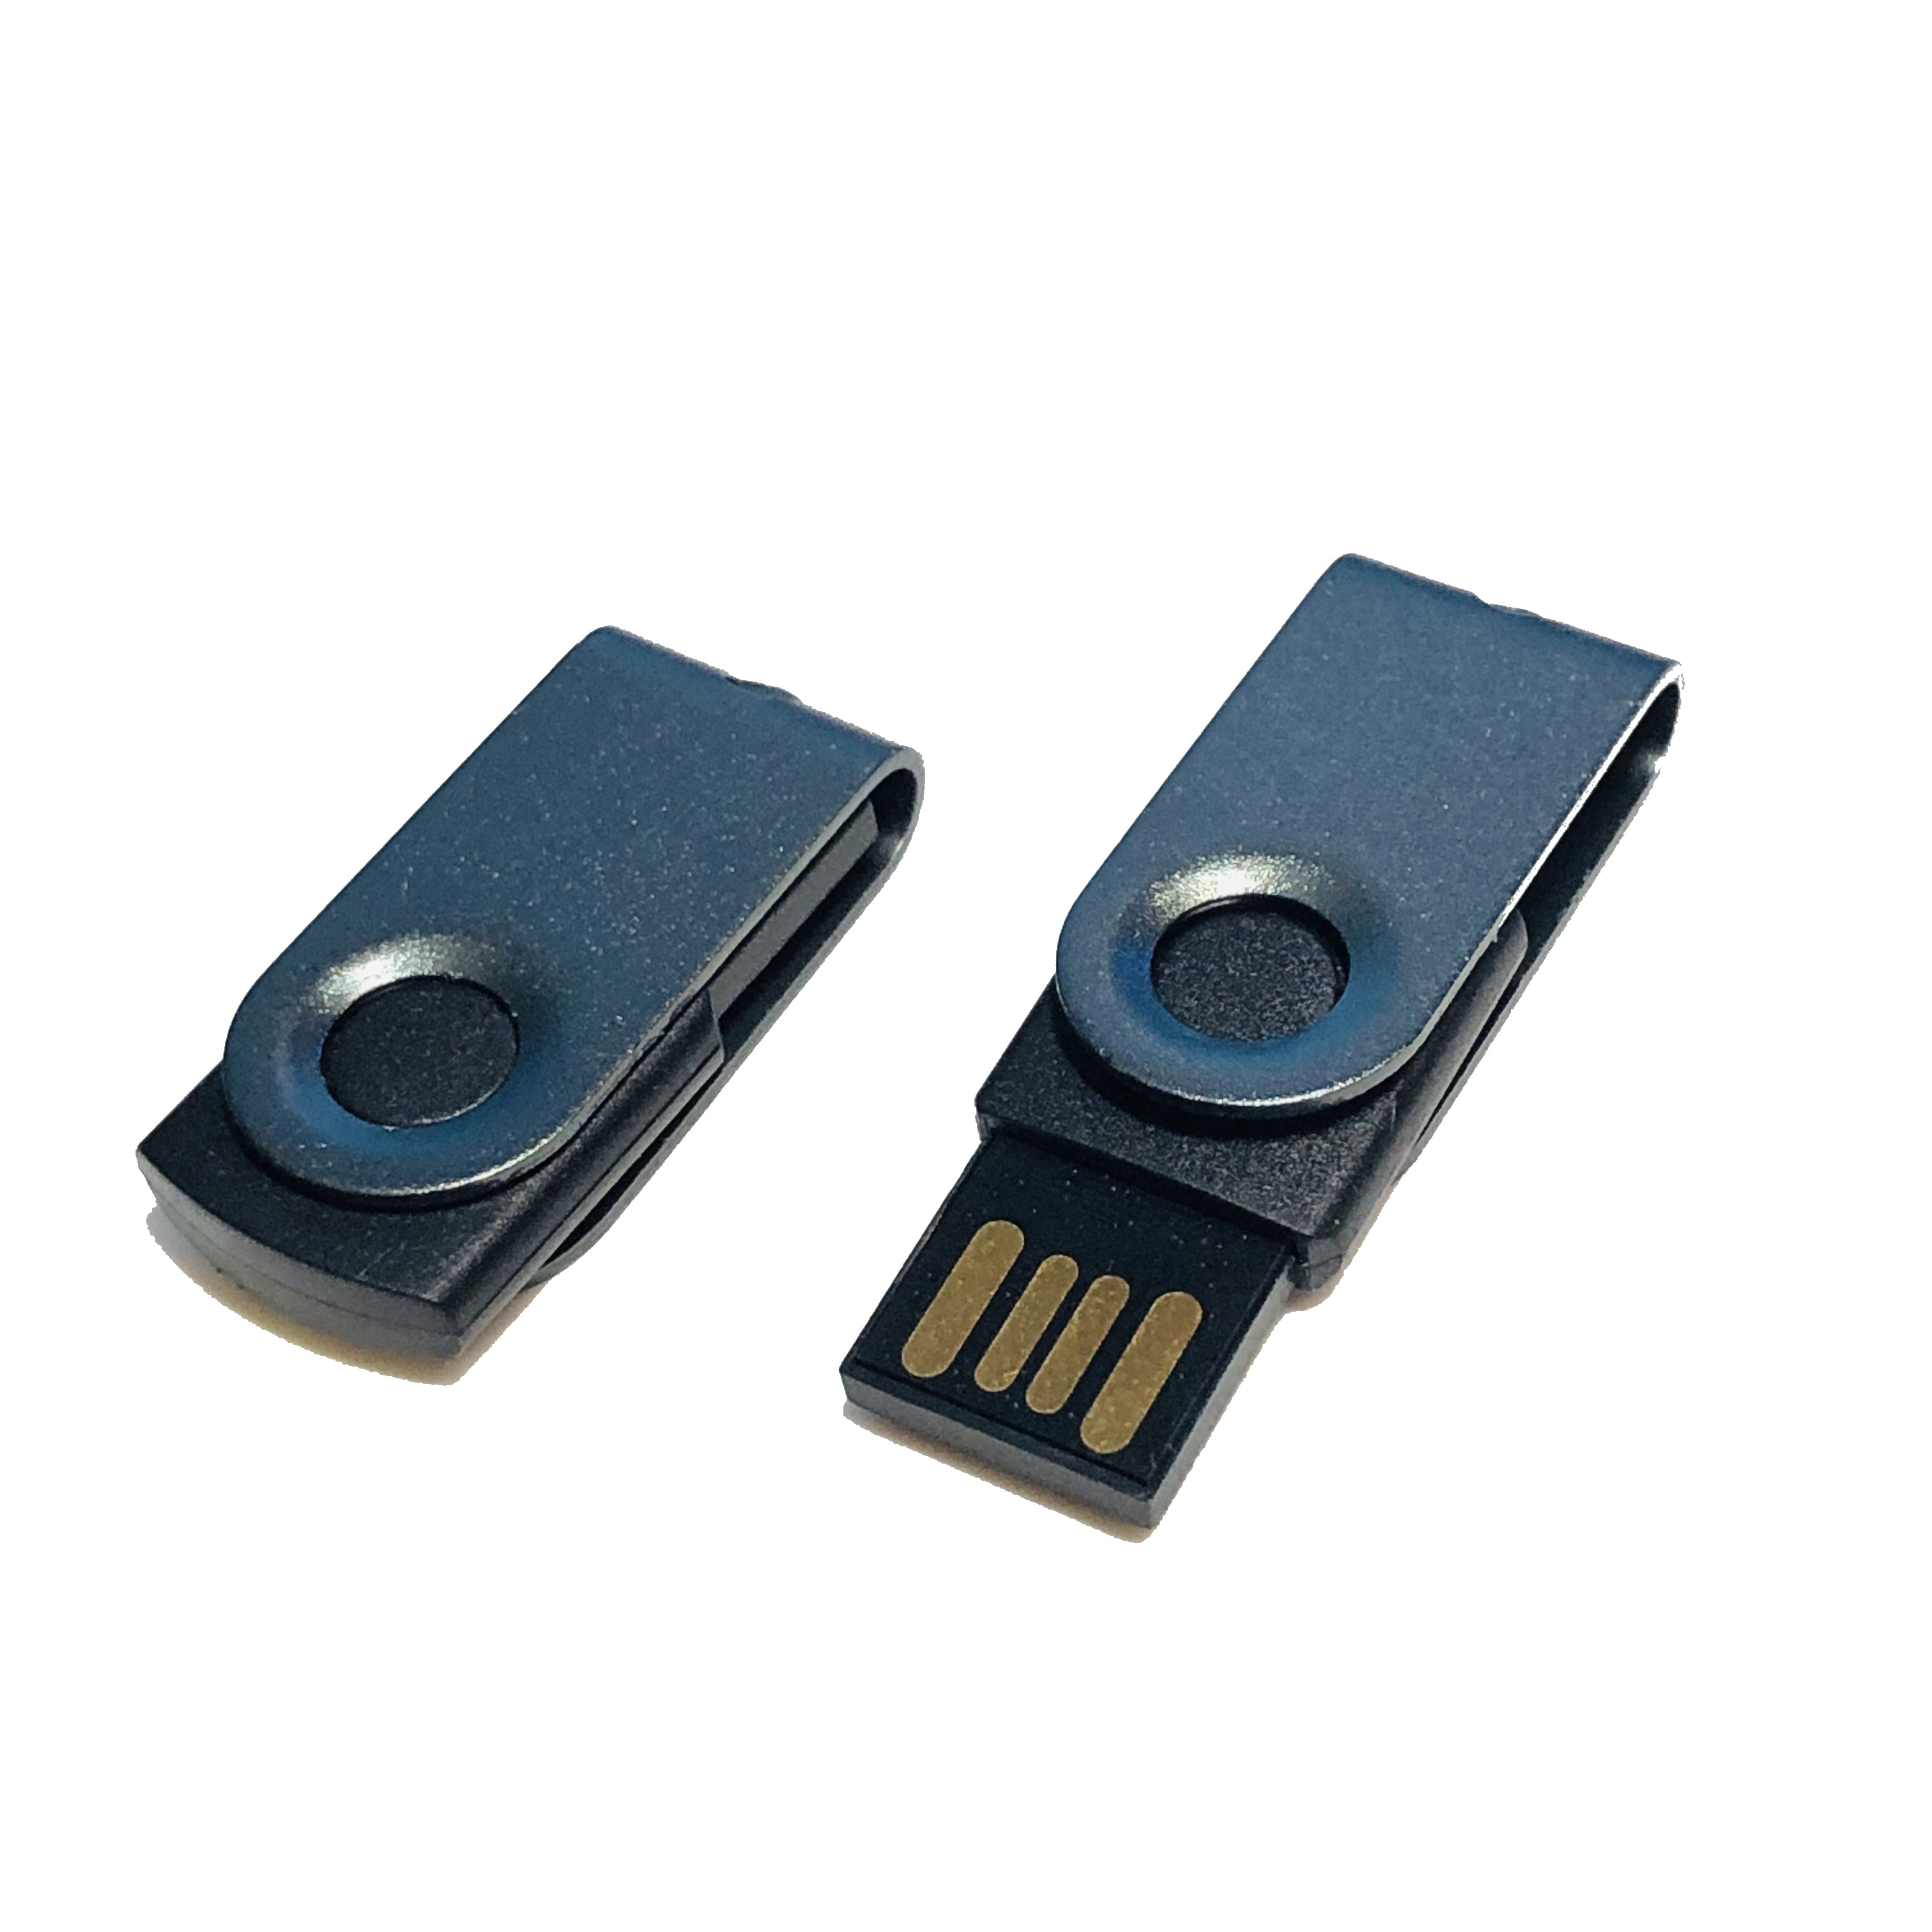 (Schwarz-Graumetall, MINI-SWIVEL USB-Stick GERMANY USB ® 16 GB)